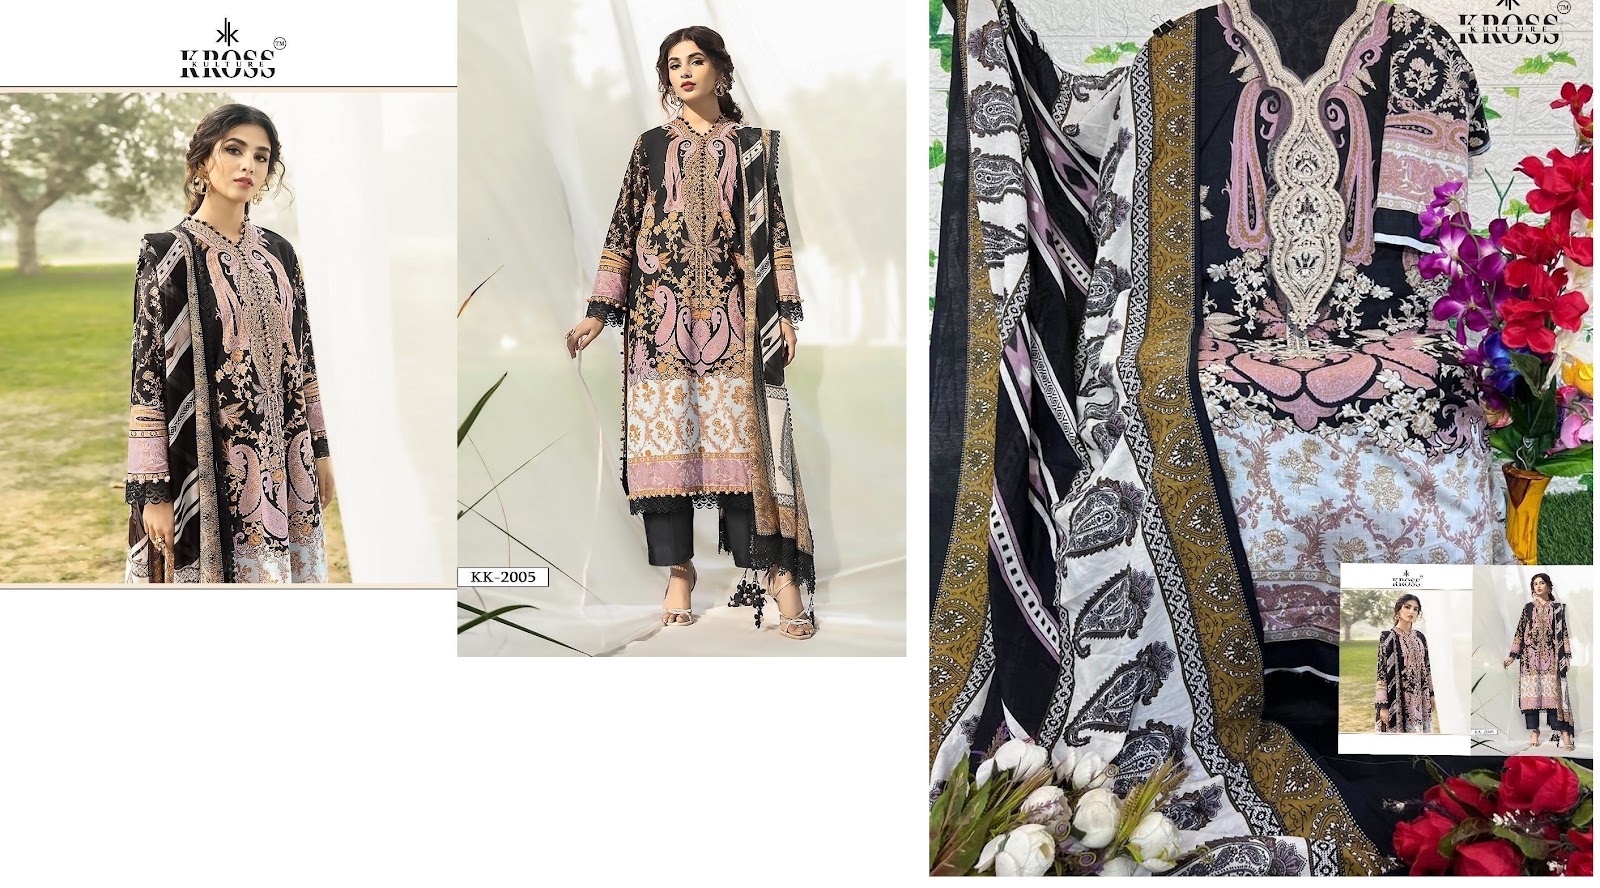 Kk 2005 Kross Kulture Cotton Embroidered Pakistani Salwar Suits